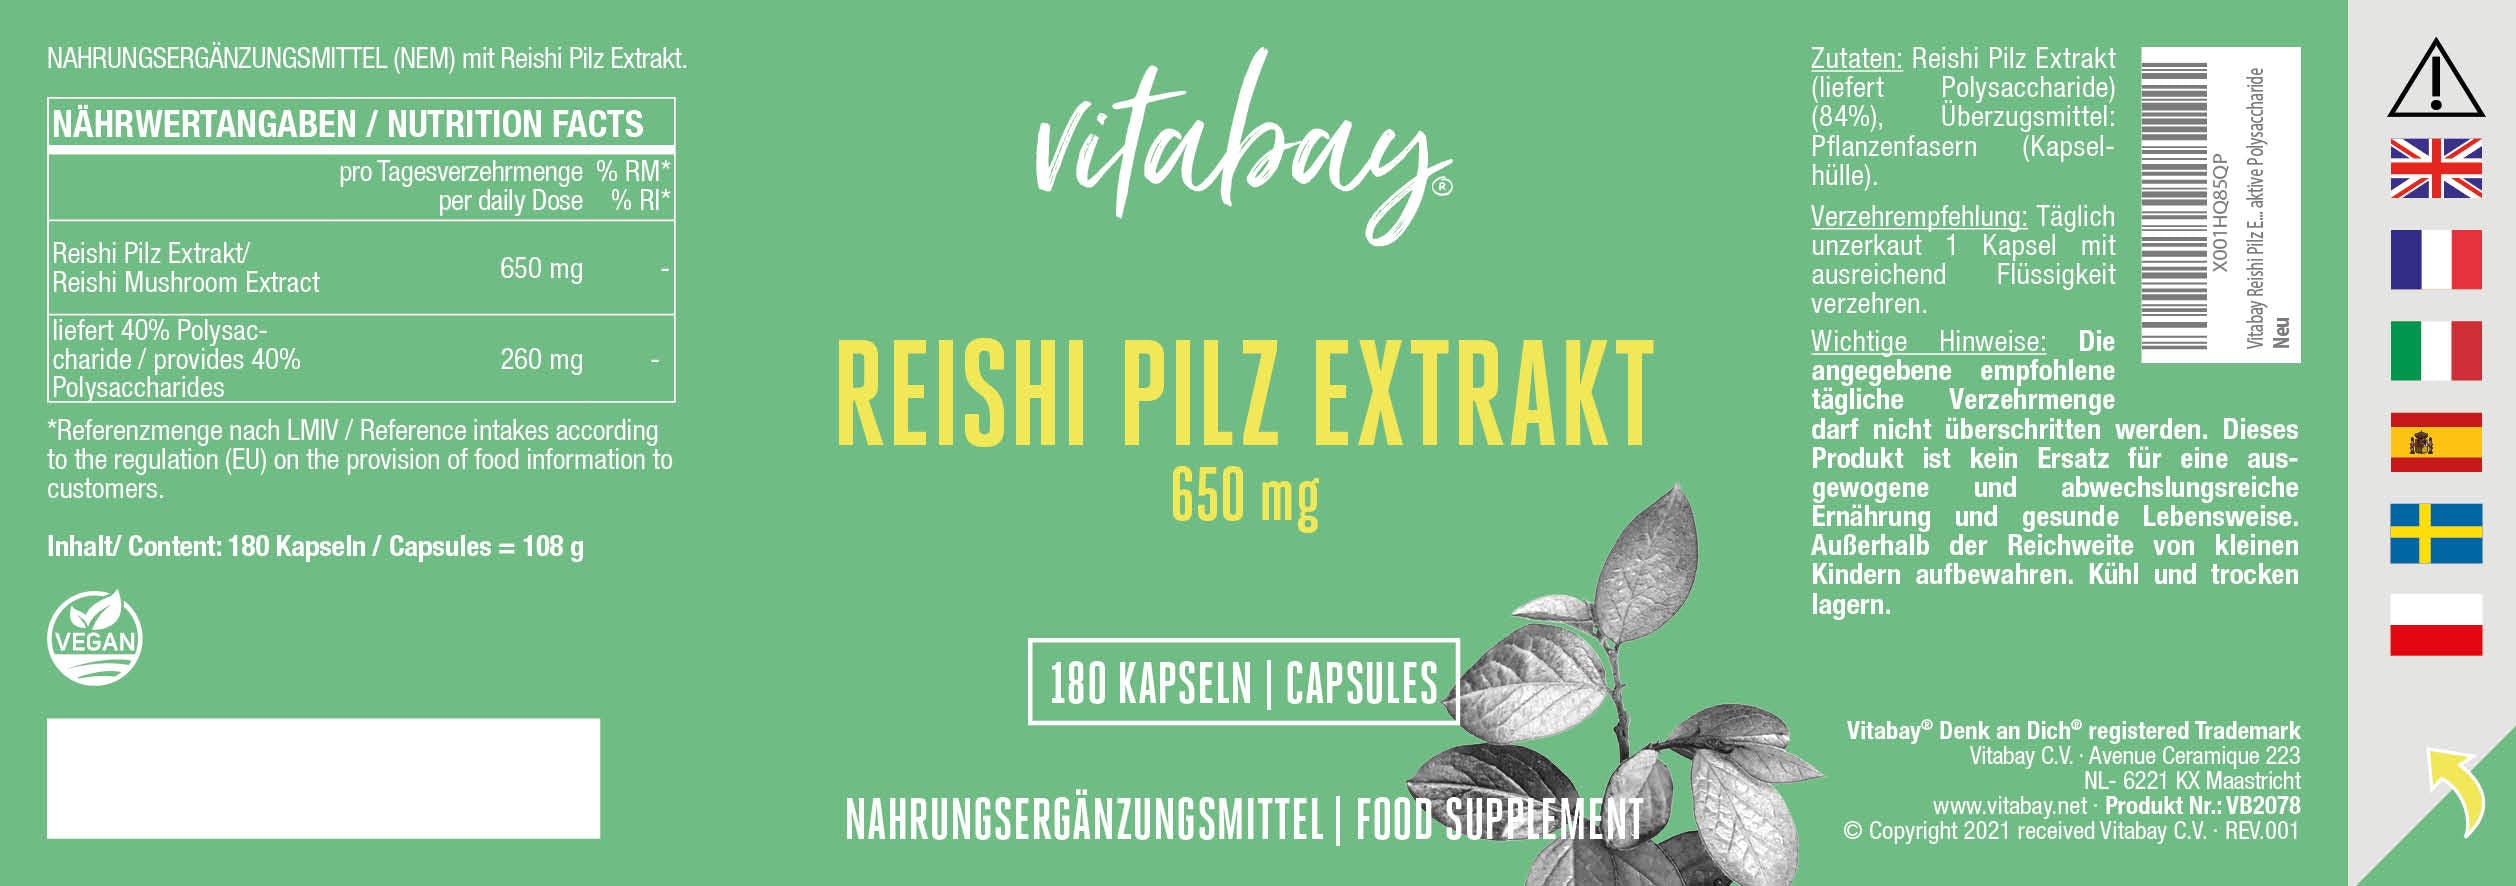 Reishi Pilz Extrakt 650 mg - 180 vegane Kapseln